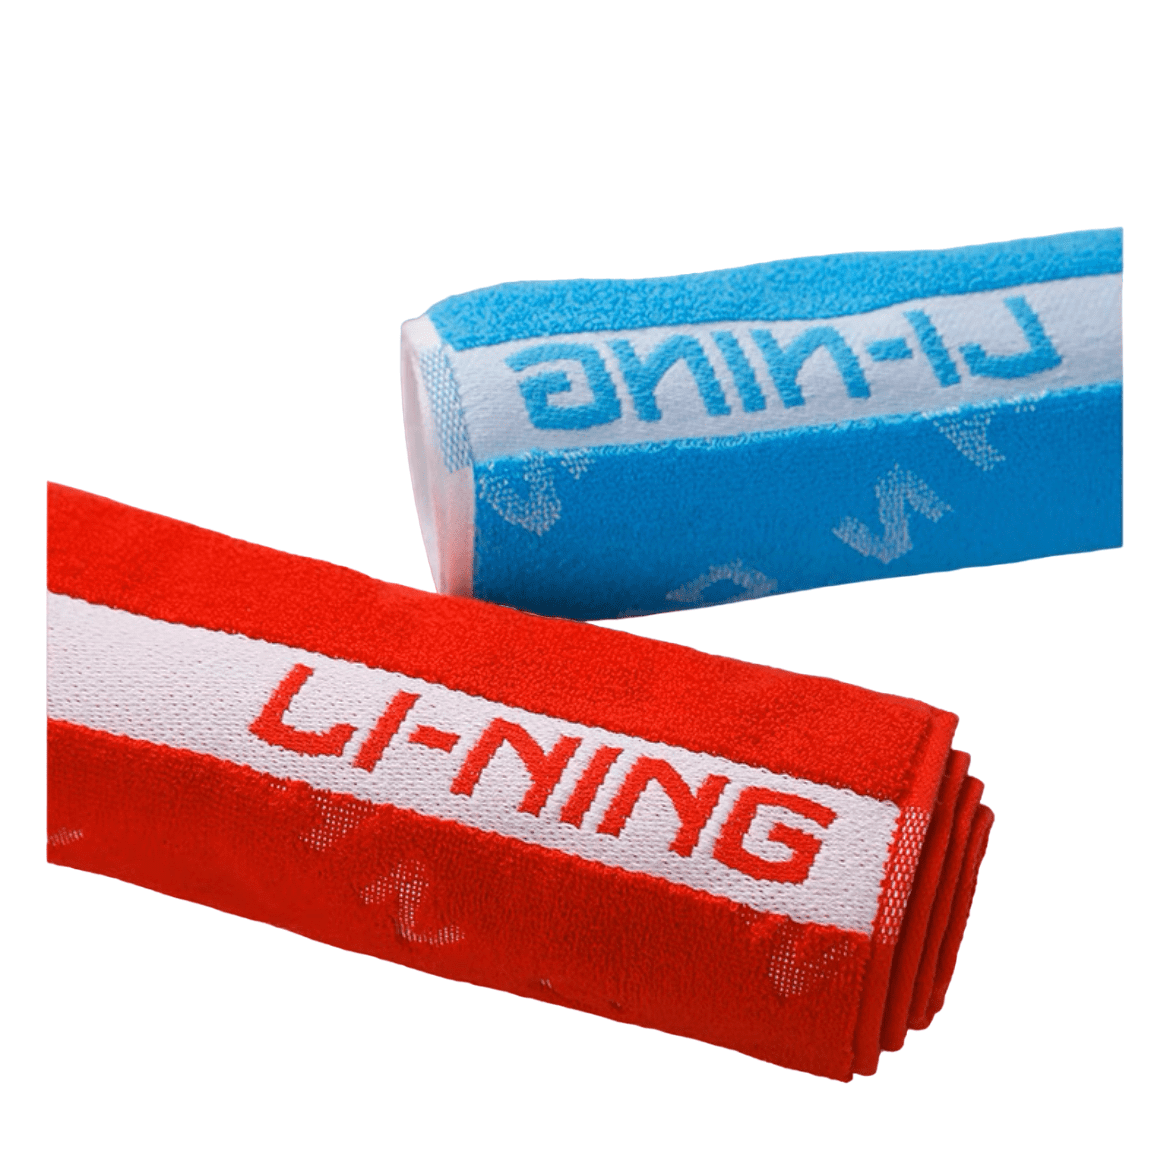 Li-Ning 100% Cotton Towel - Sky Blue / White color